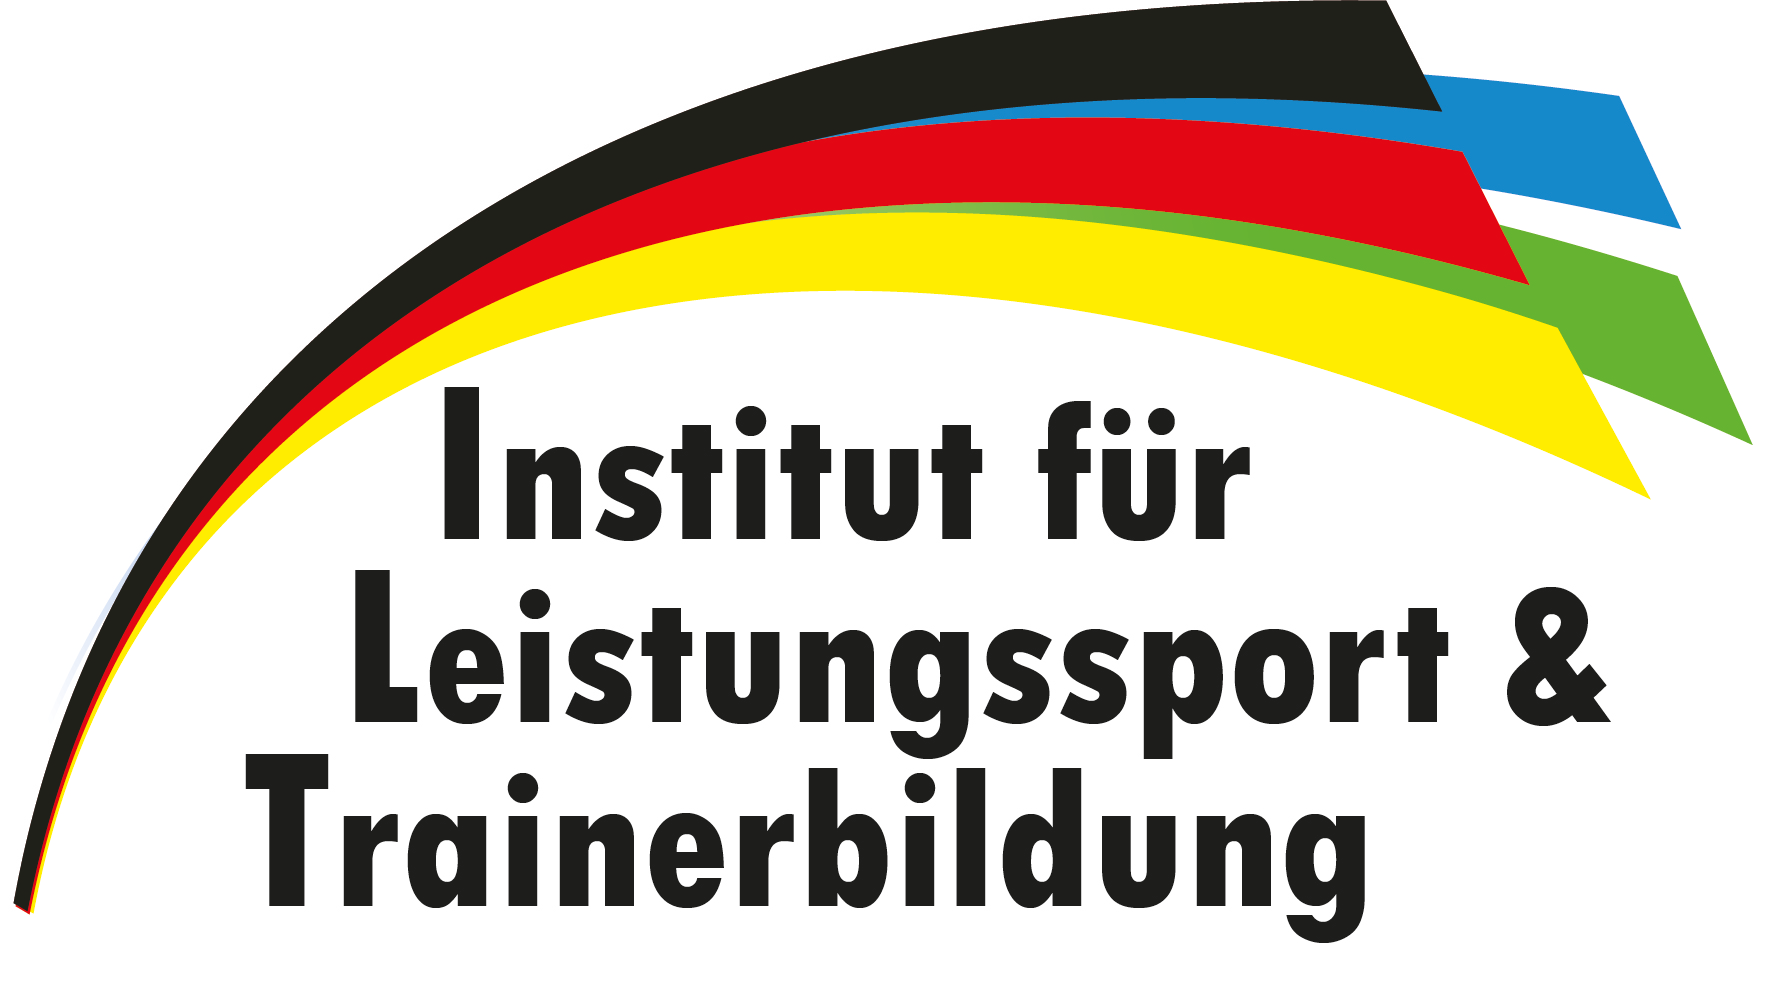 Logo des ILT